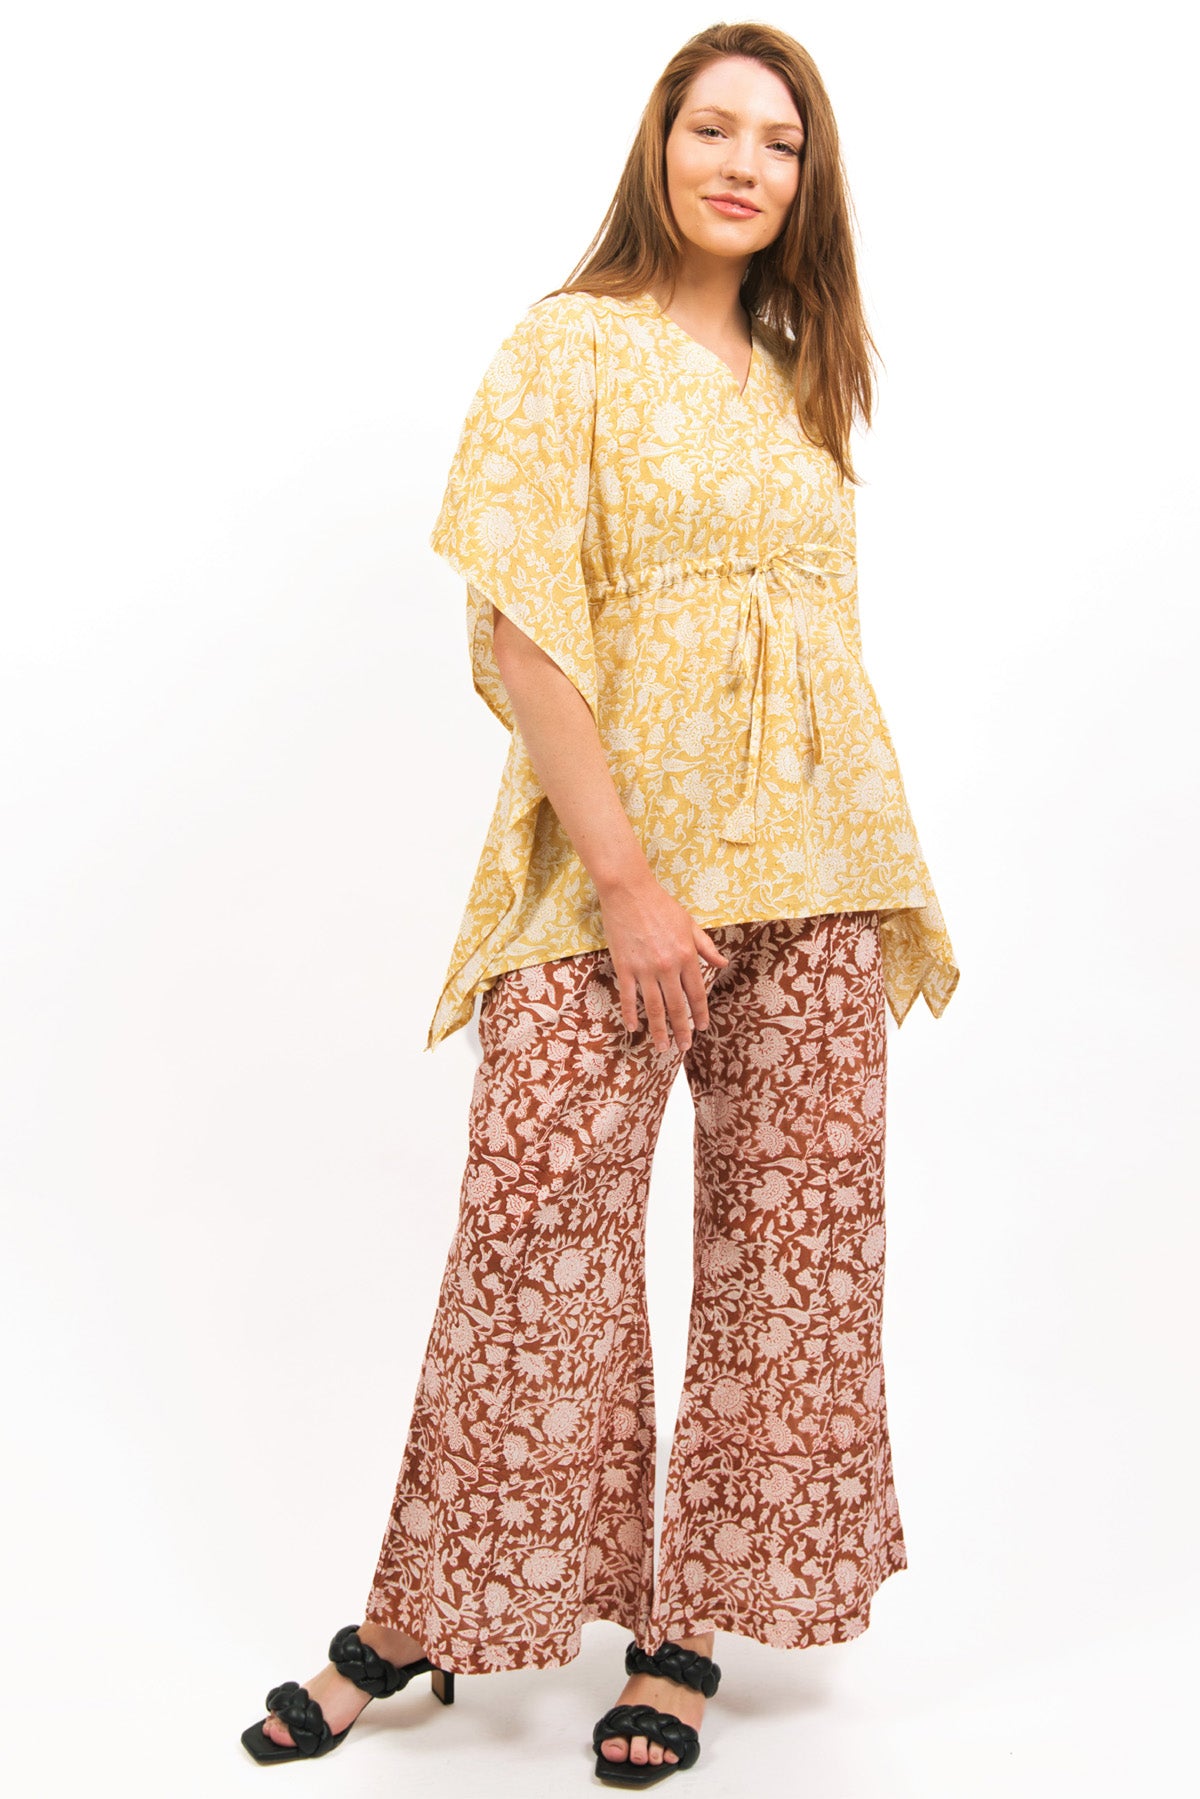 ZINNIA SHORT KAFTAN TOP -worn with amber pants as a cute summer outfit- zohaonline